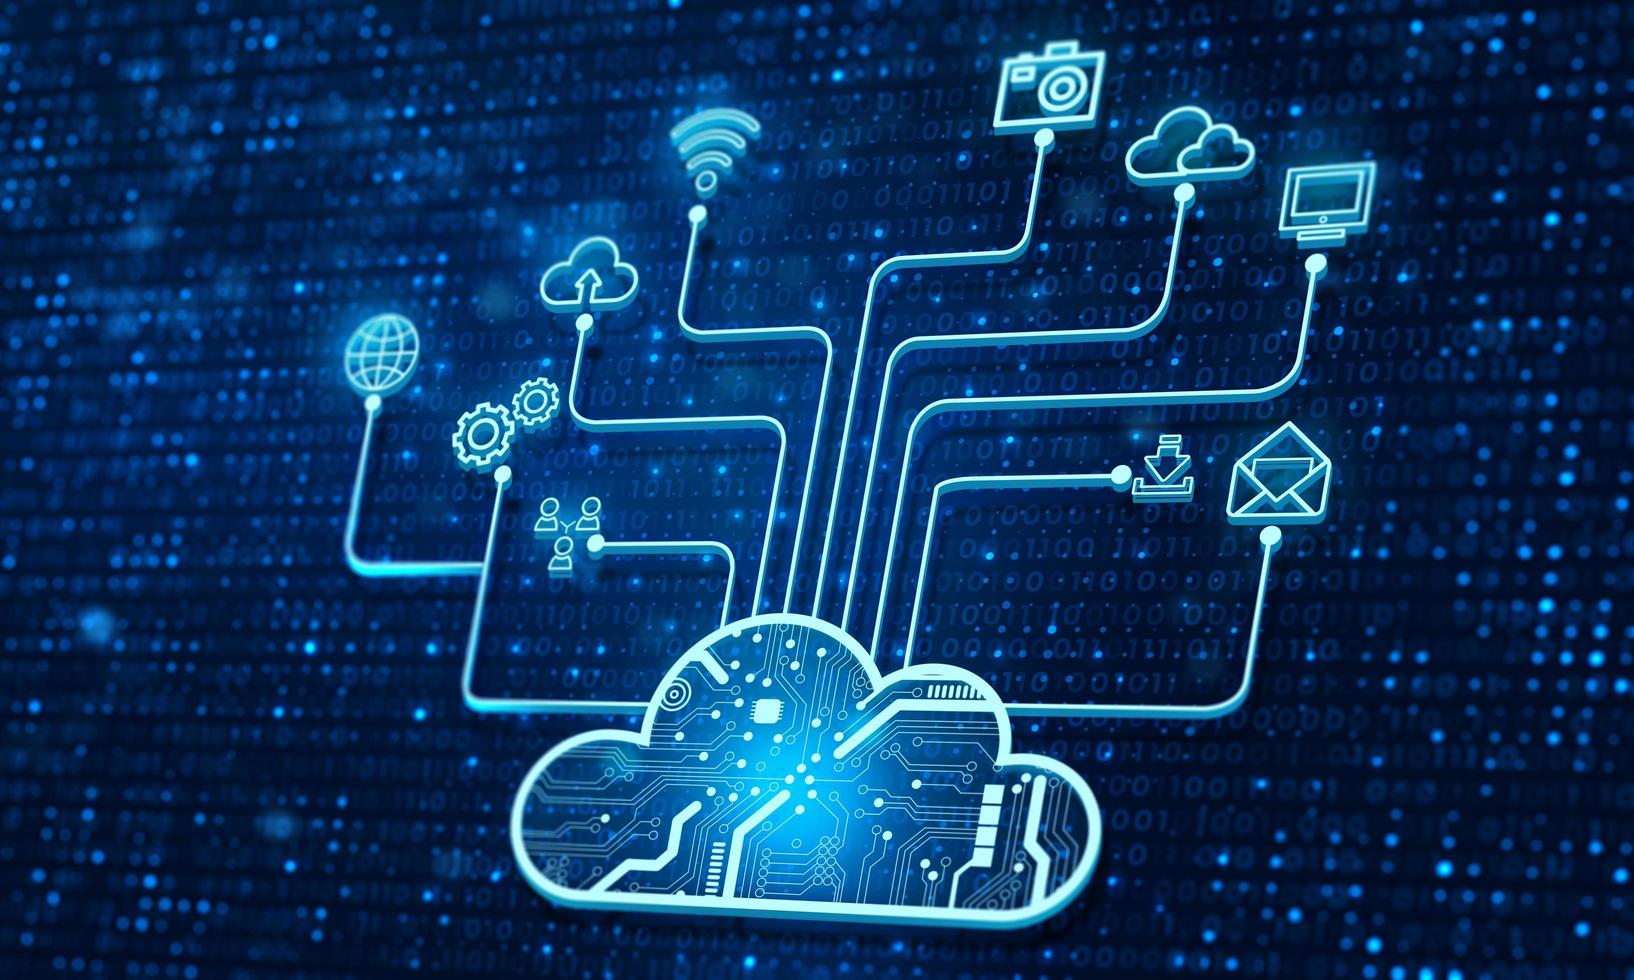 Cloud computing technology. Data information on cloud to backup storage internet data. photo